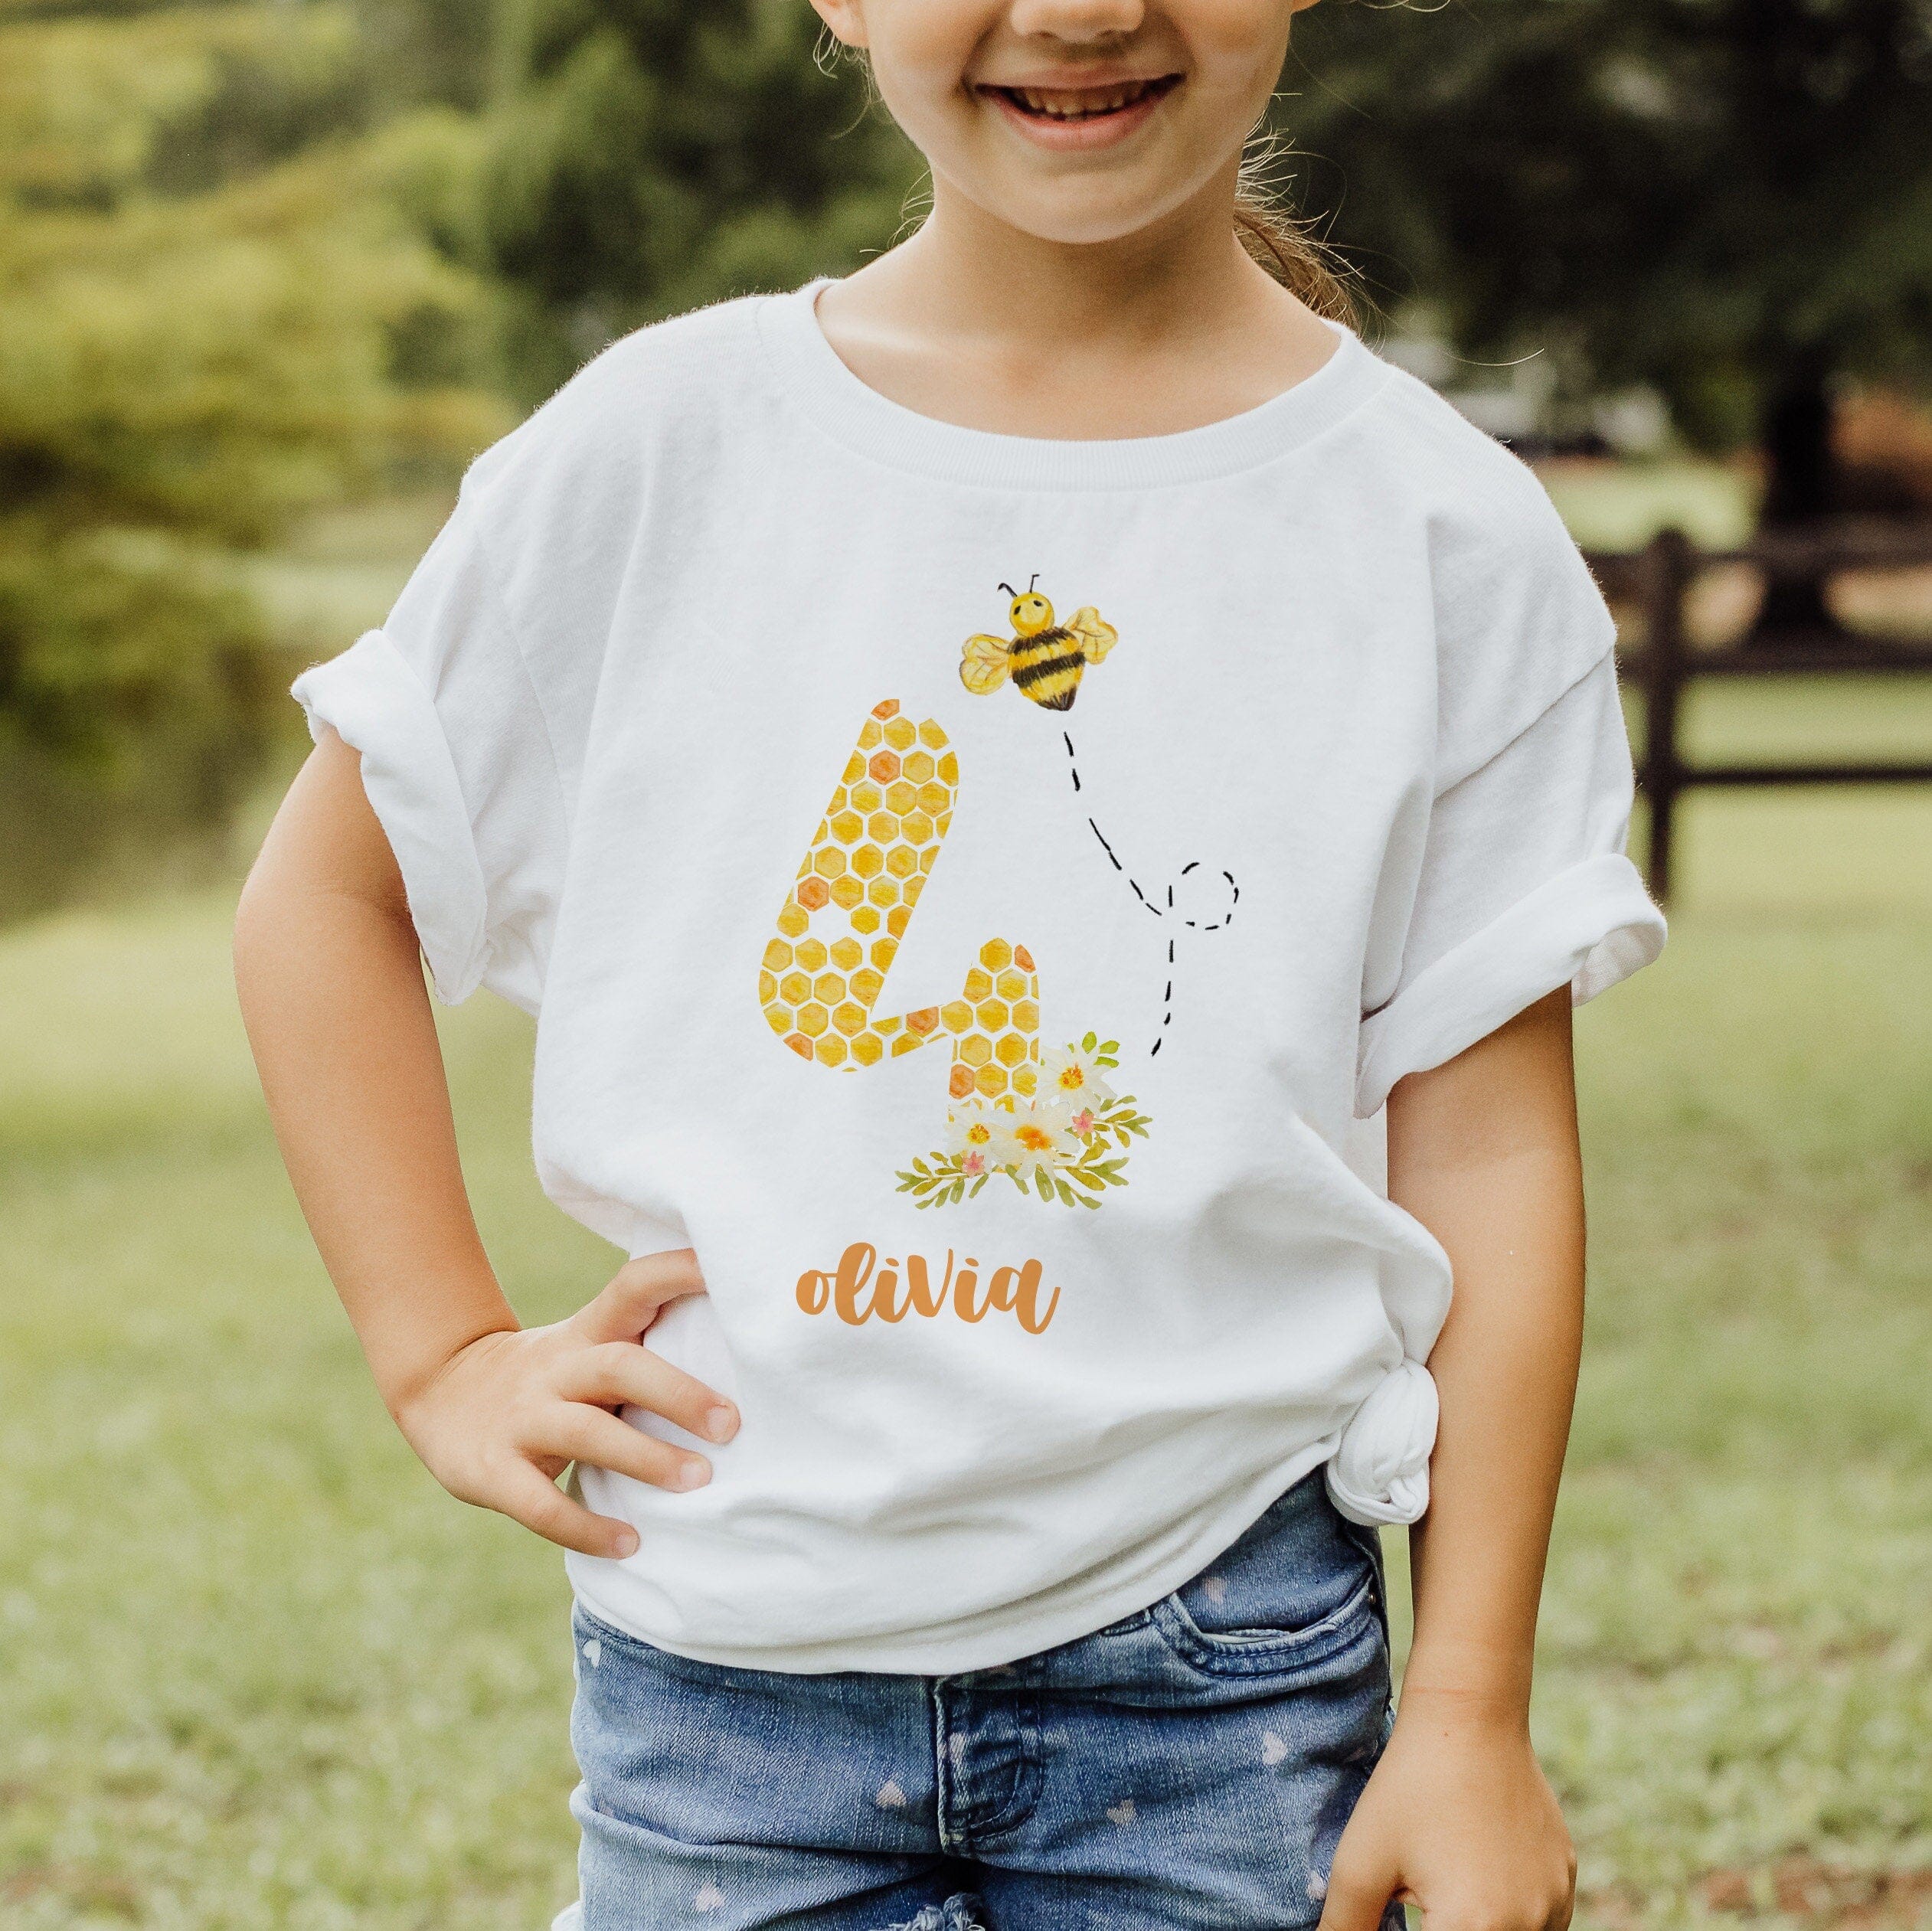 Personalised bee design kids birthday t-shirt, Boy girl tshirt top, Name is One